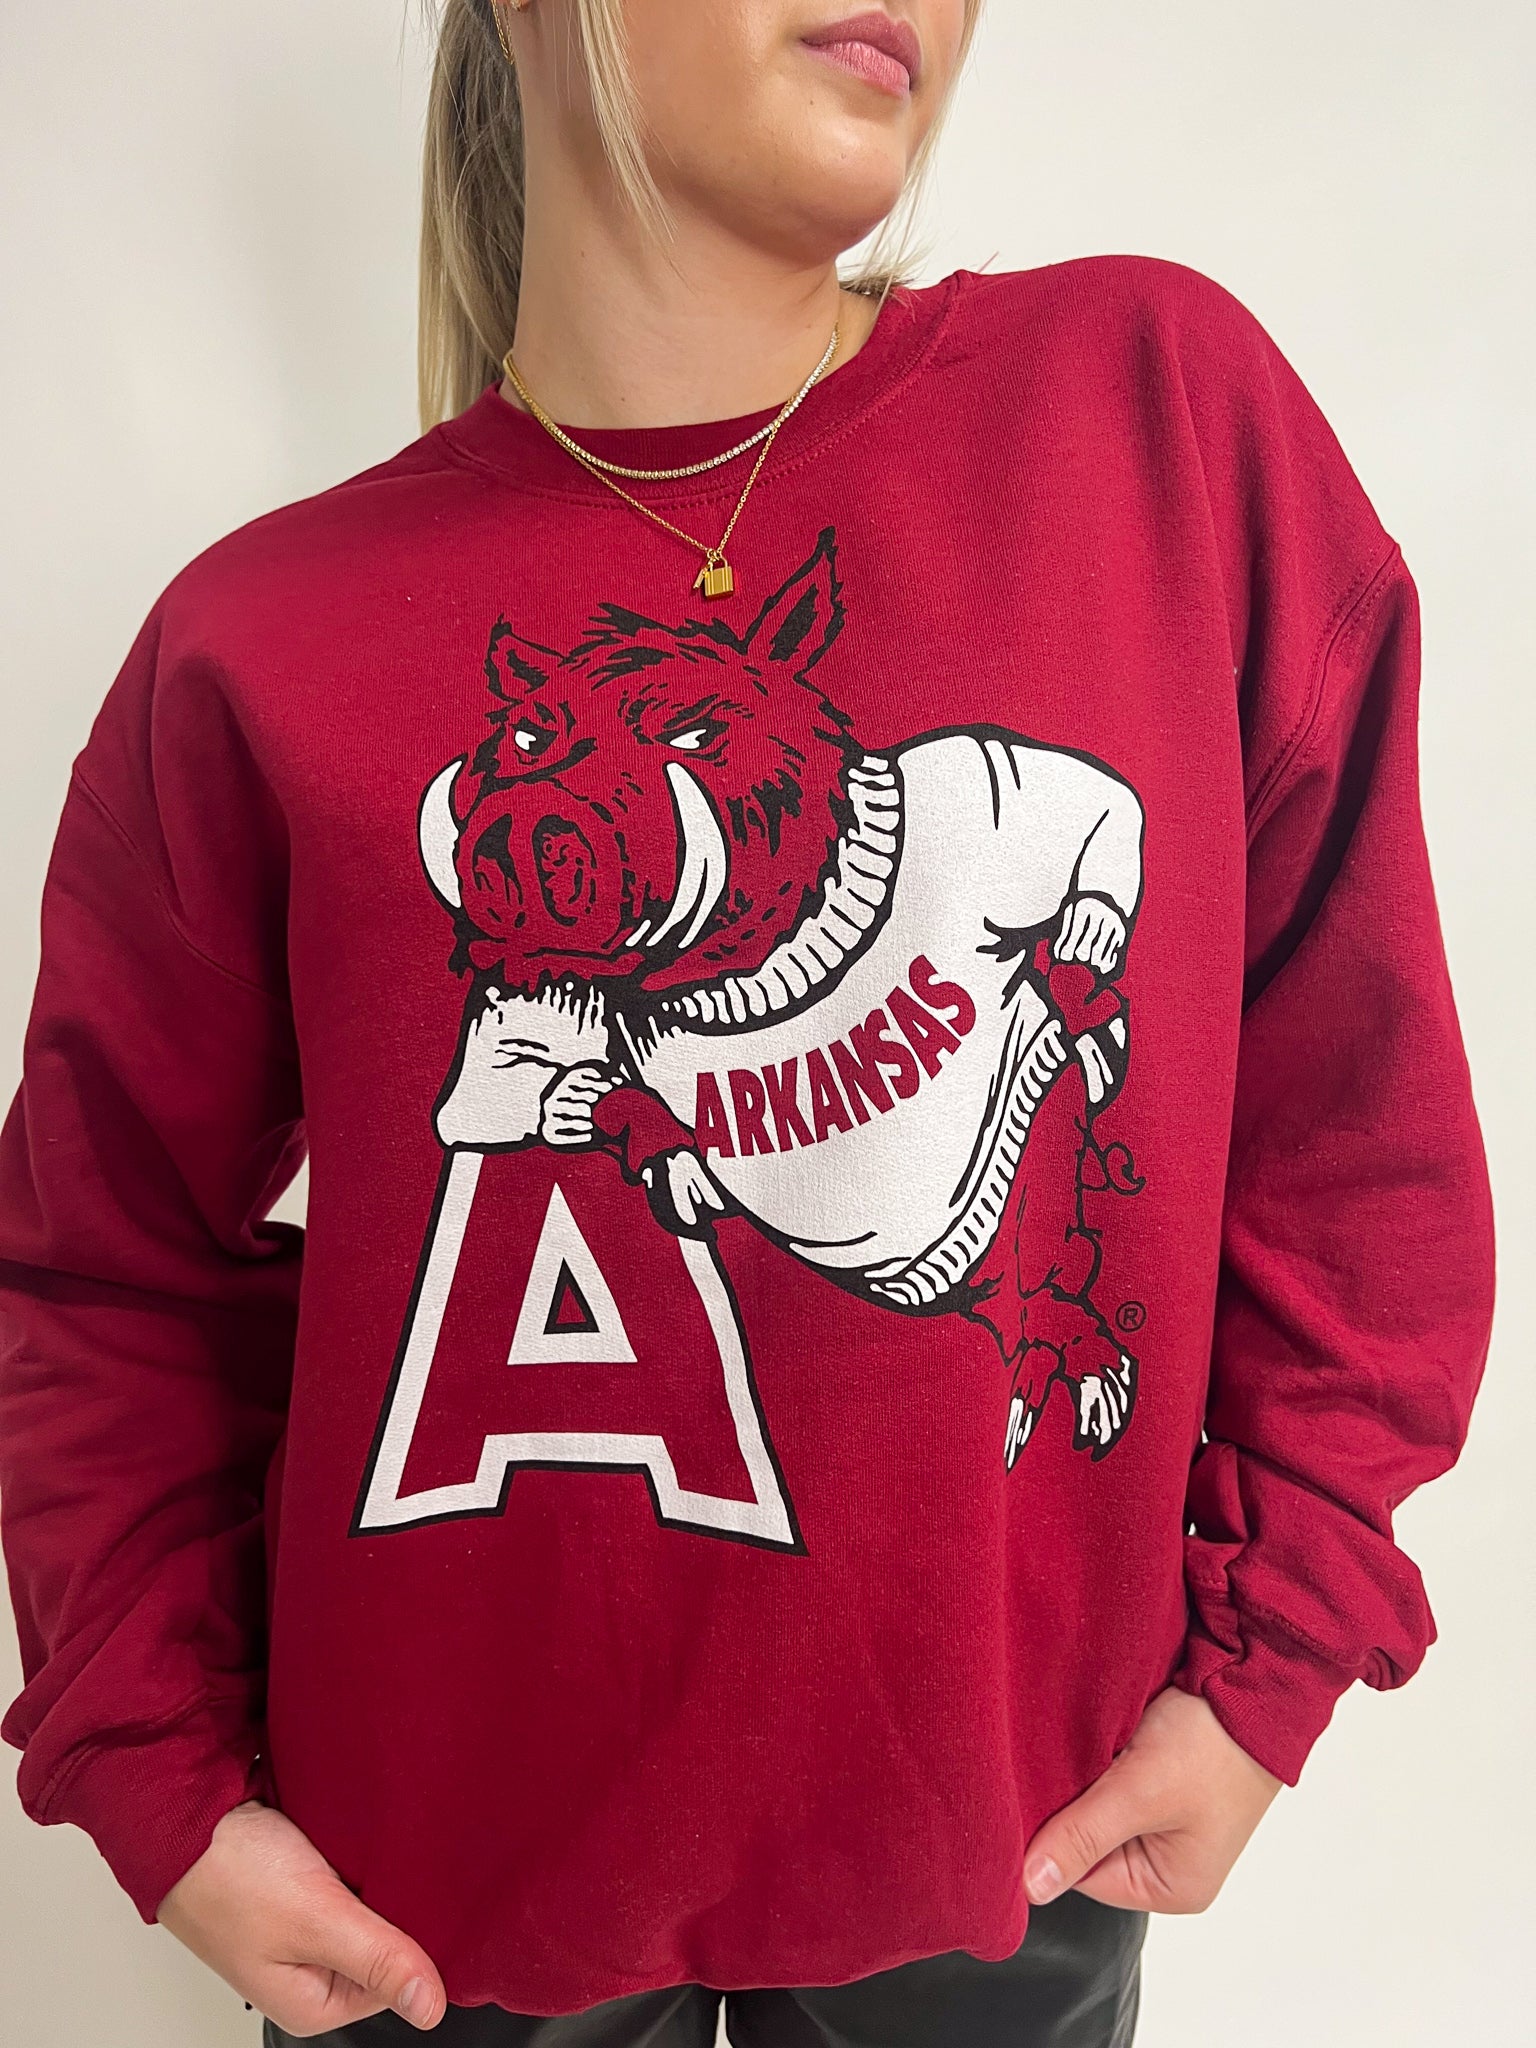 Hog on "A" Sweatshirt